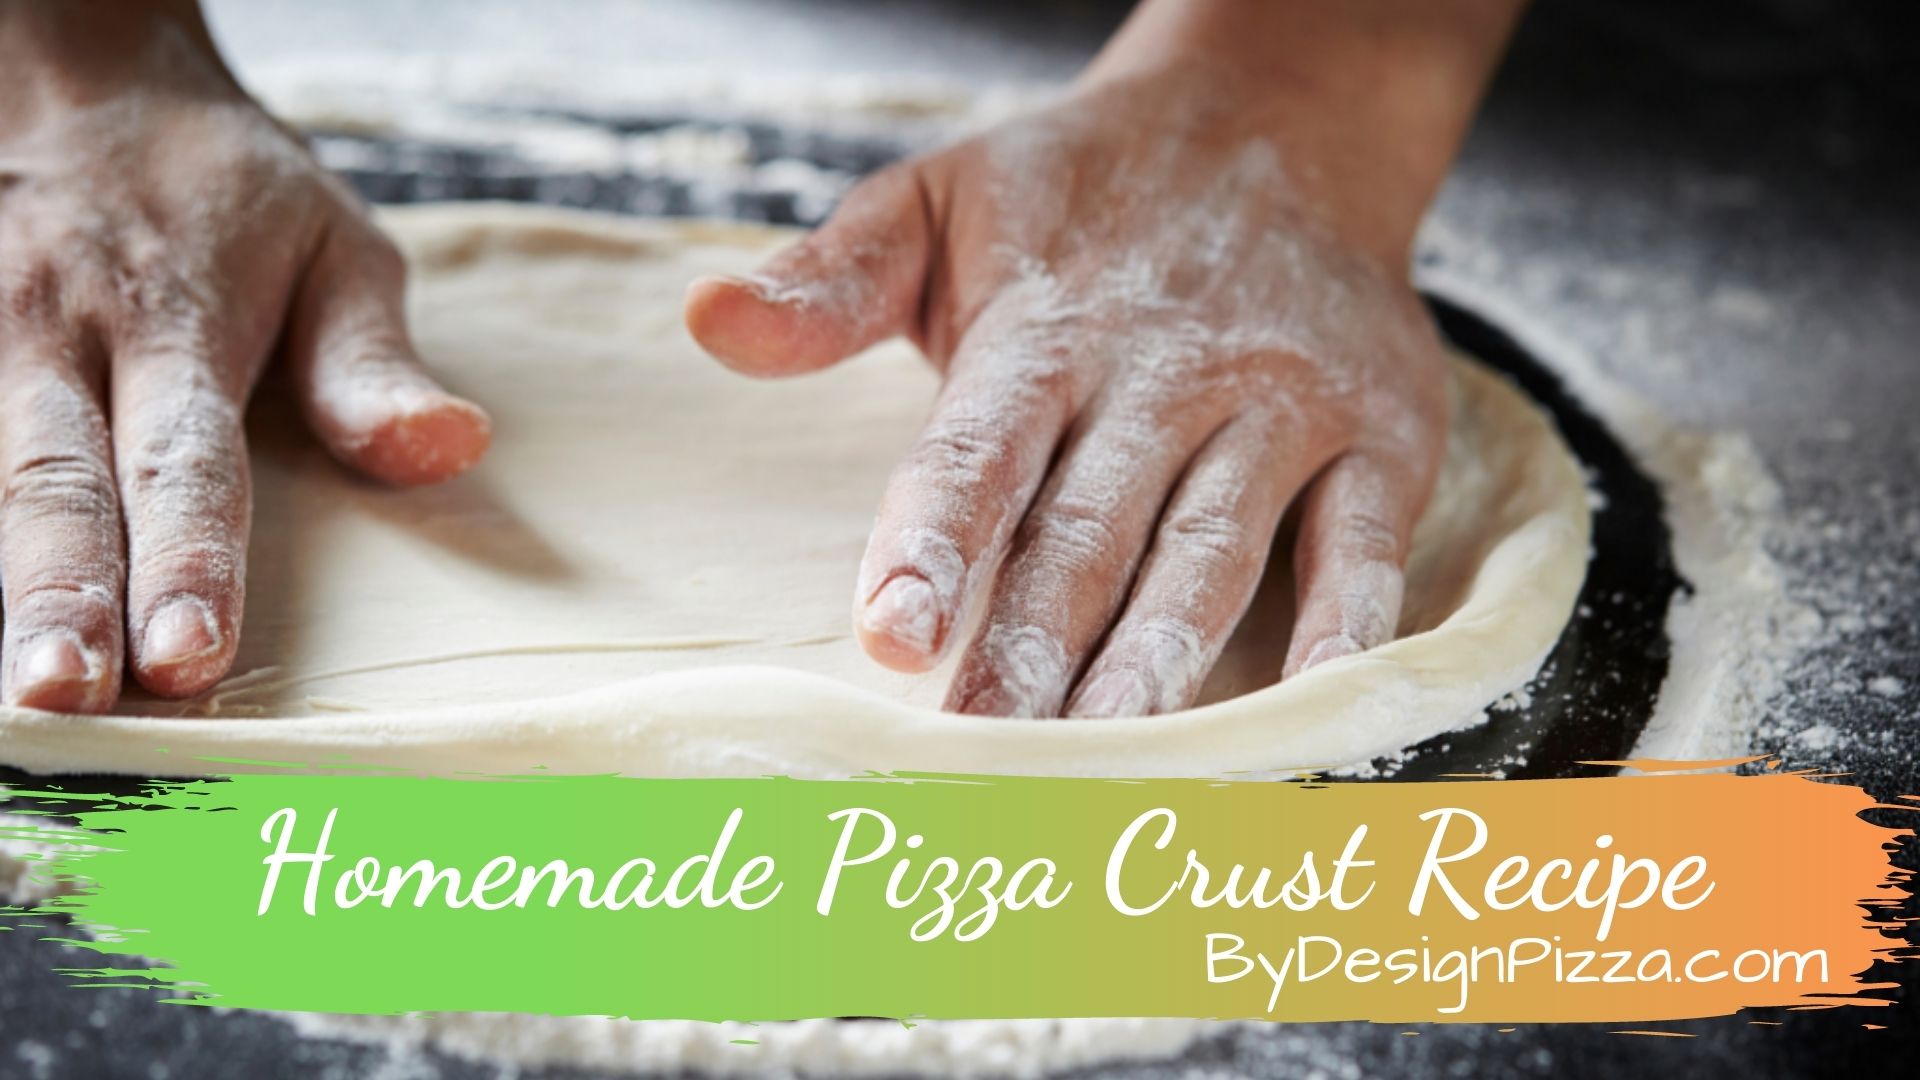 Homemade Pizza Crust Recipe?